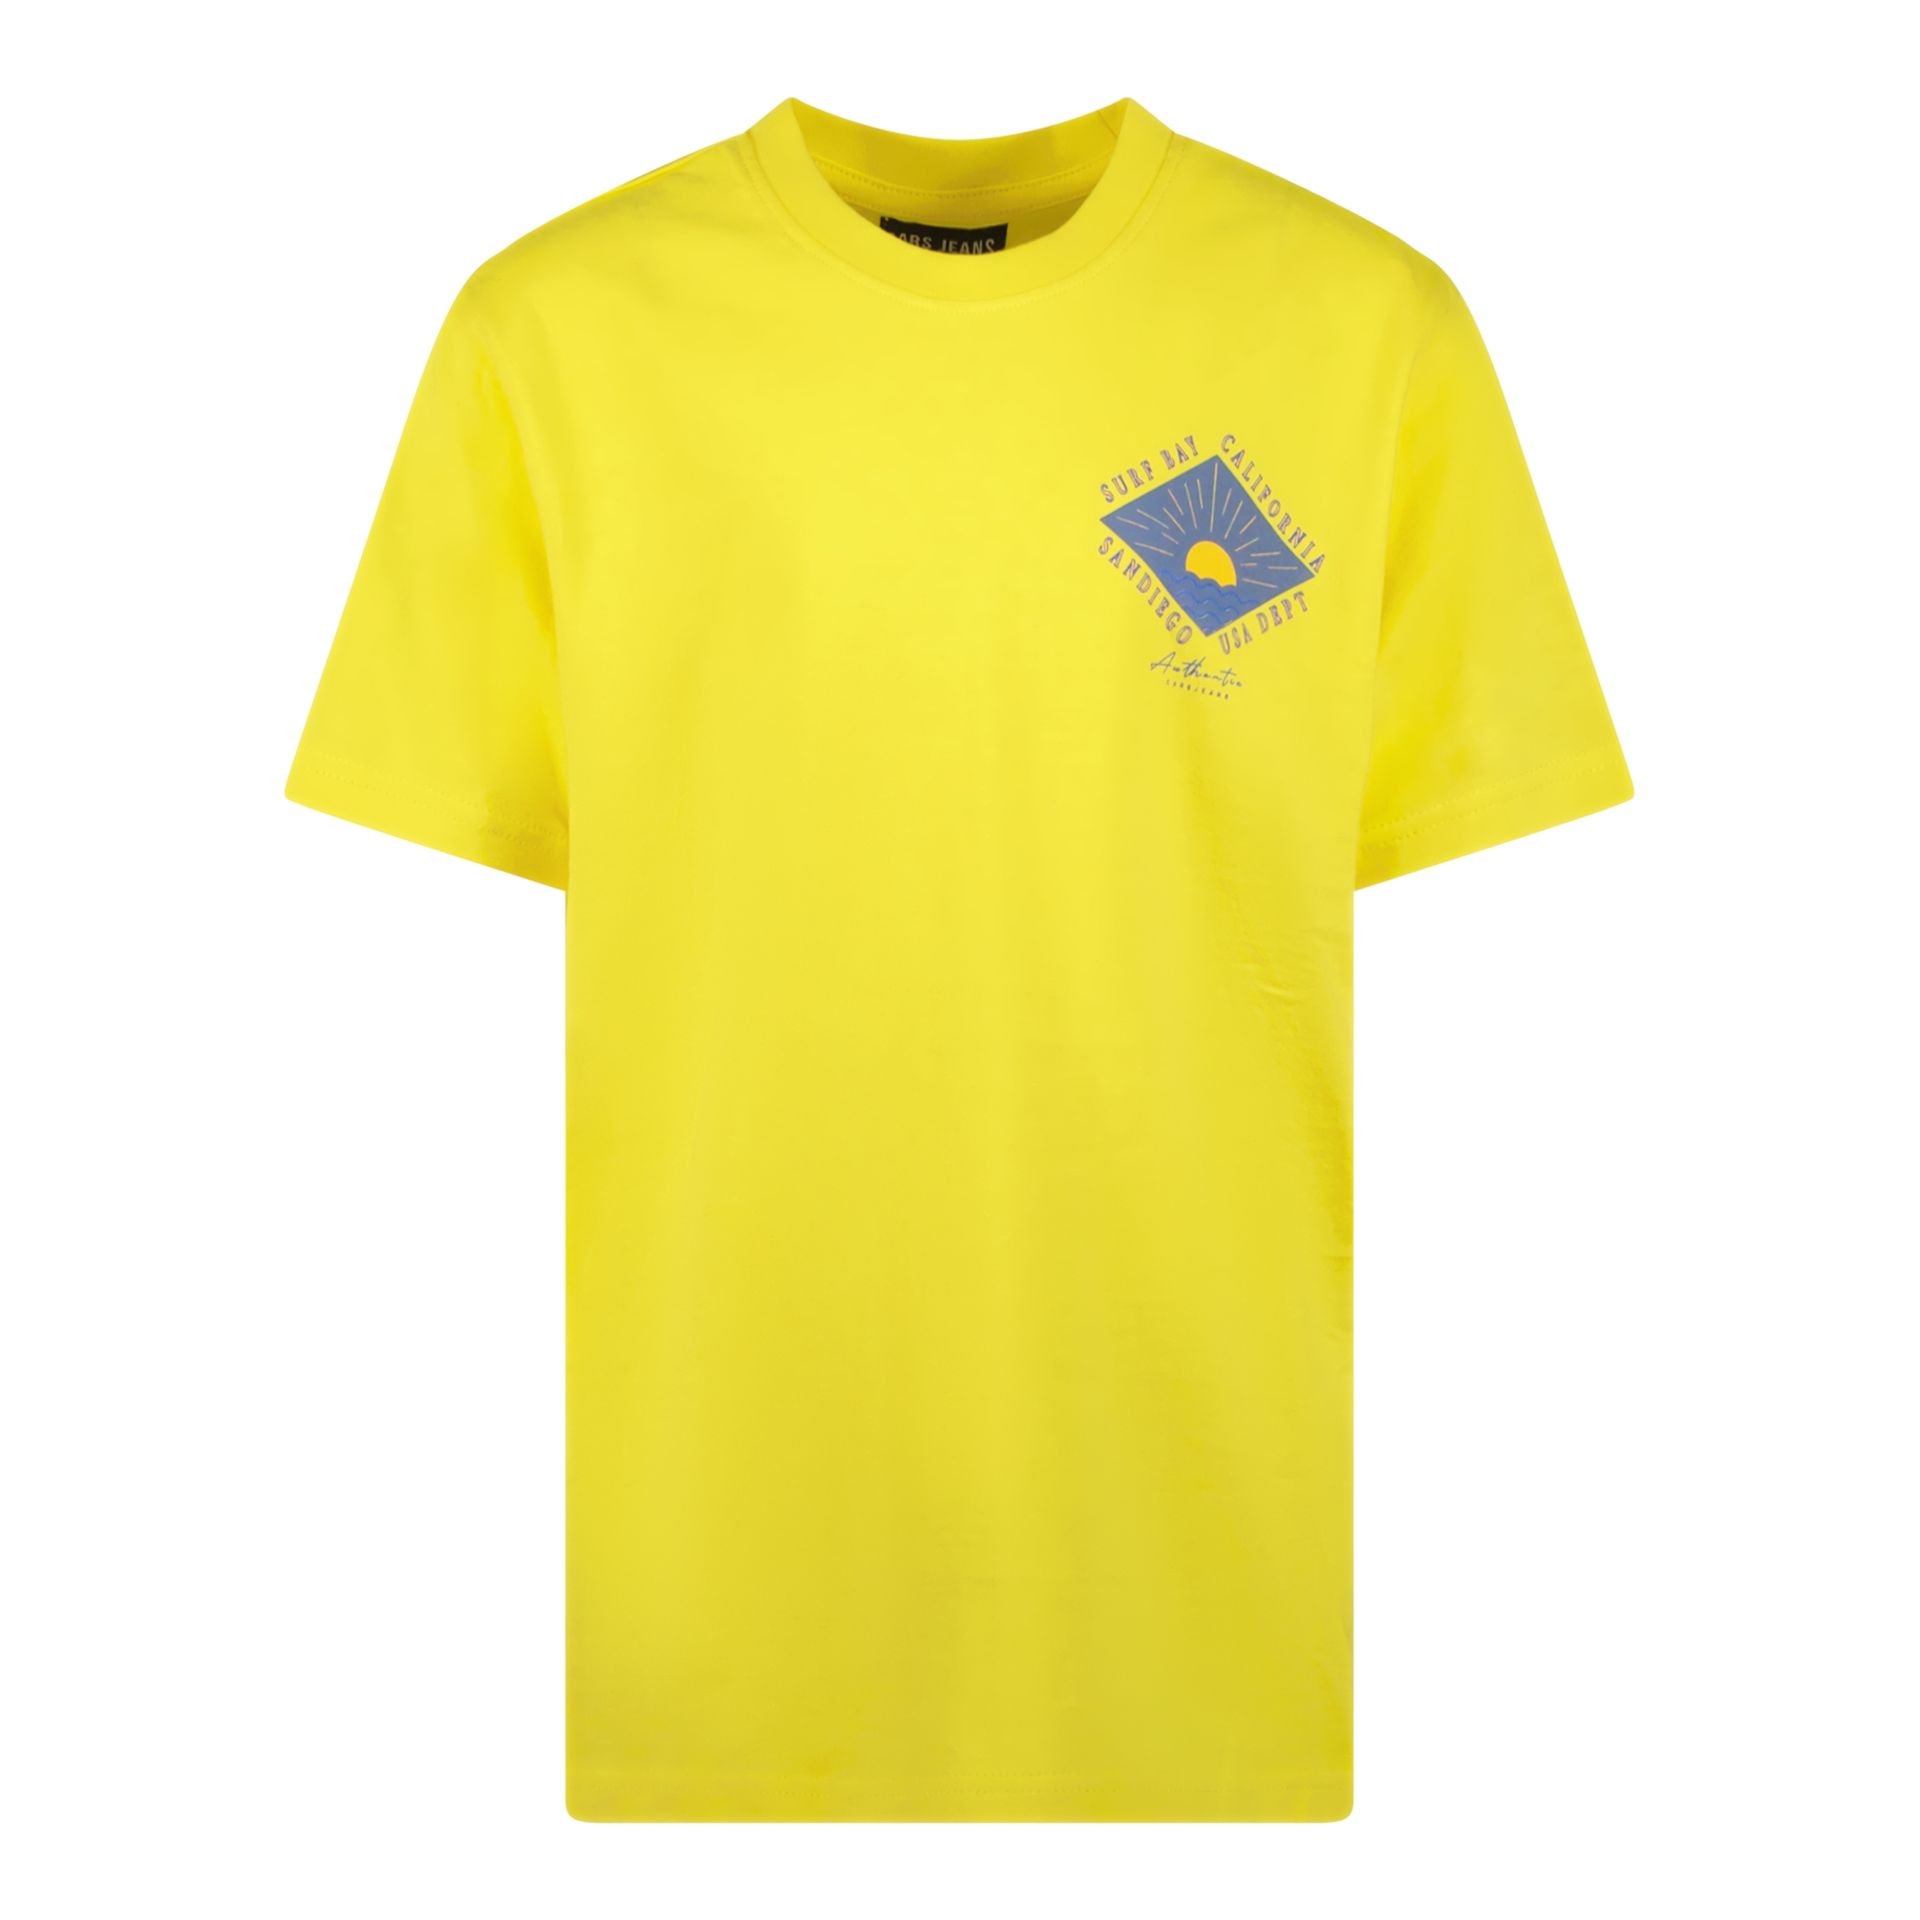 Cars jeans T-shirt Shorell Jr. 30 yellow 2900148099073